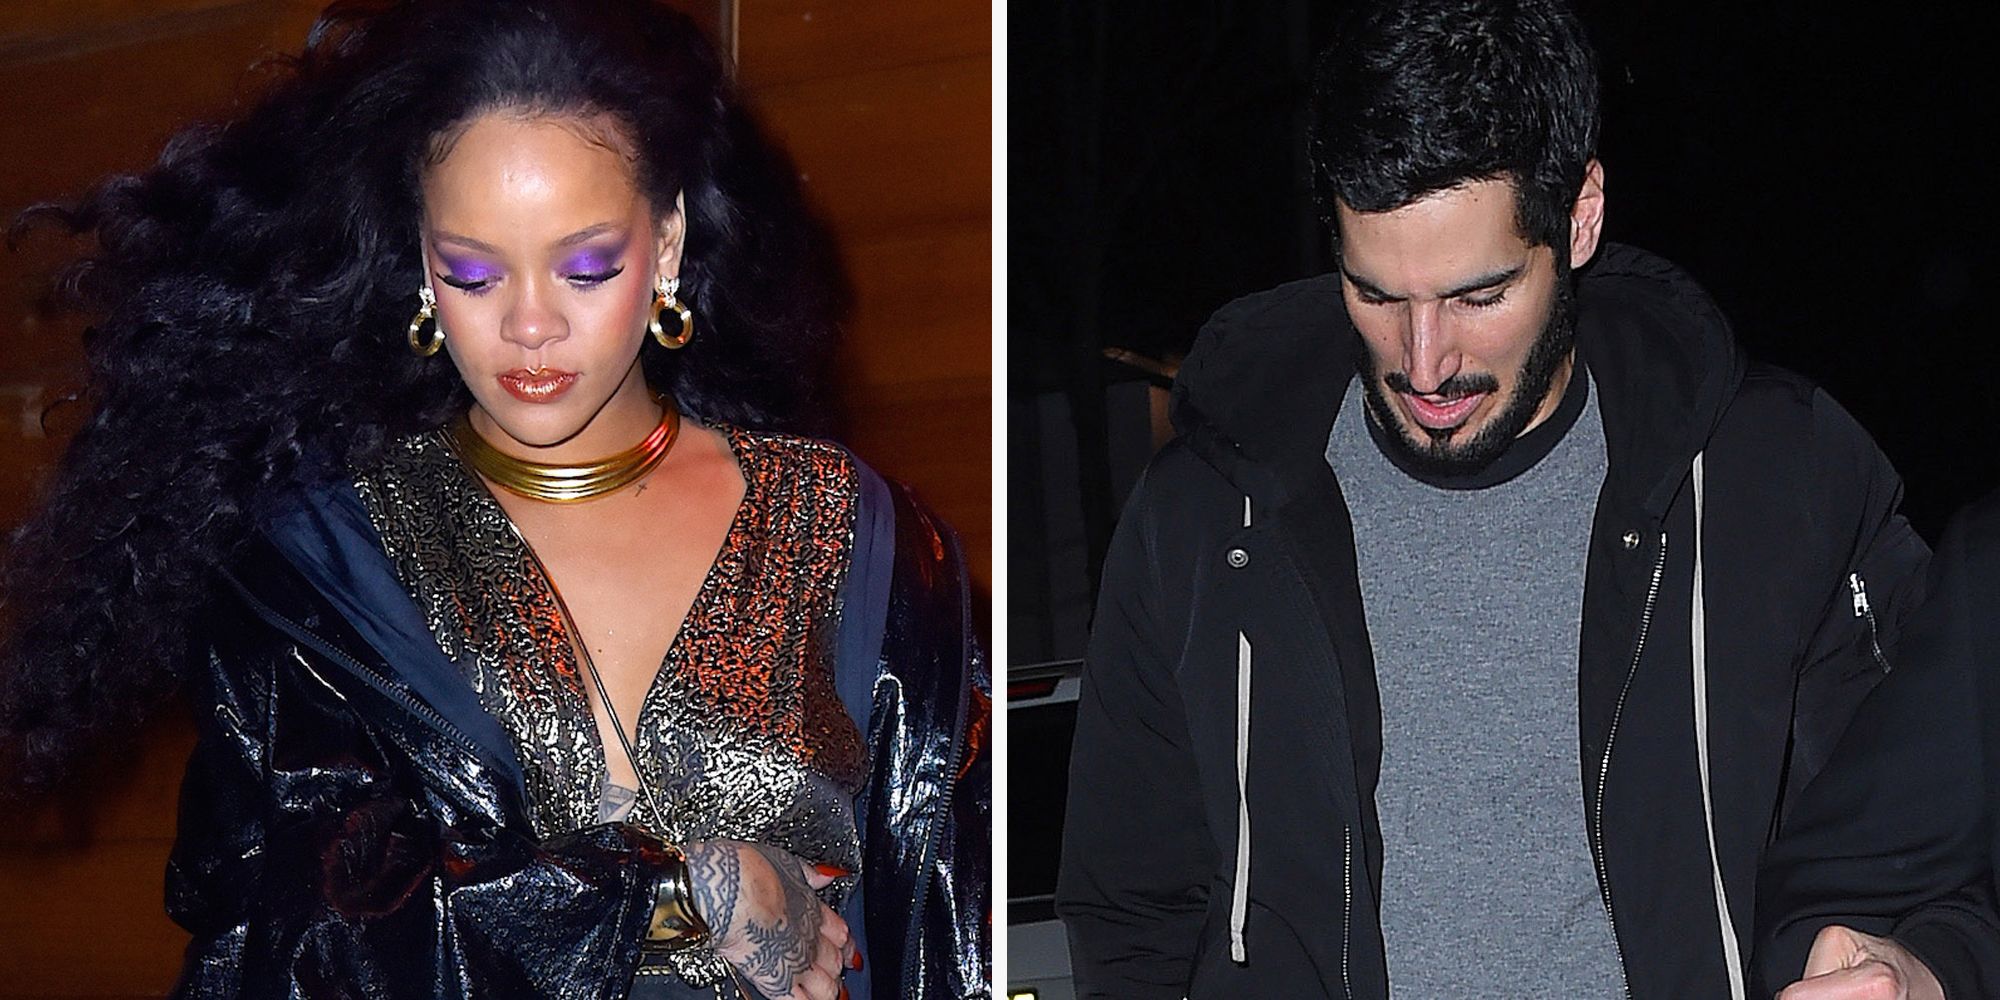 Rihanna Parties with Boyfriend After Grammys - Rihanna and Hassan Jameel